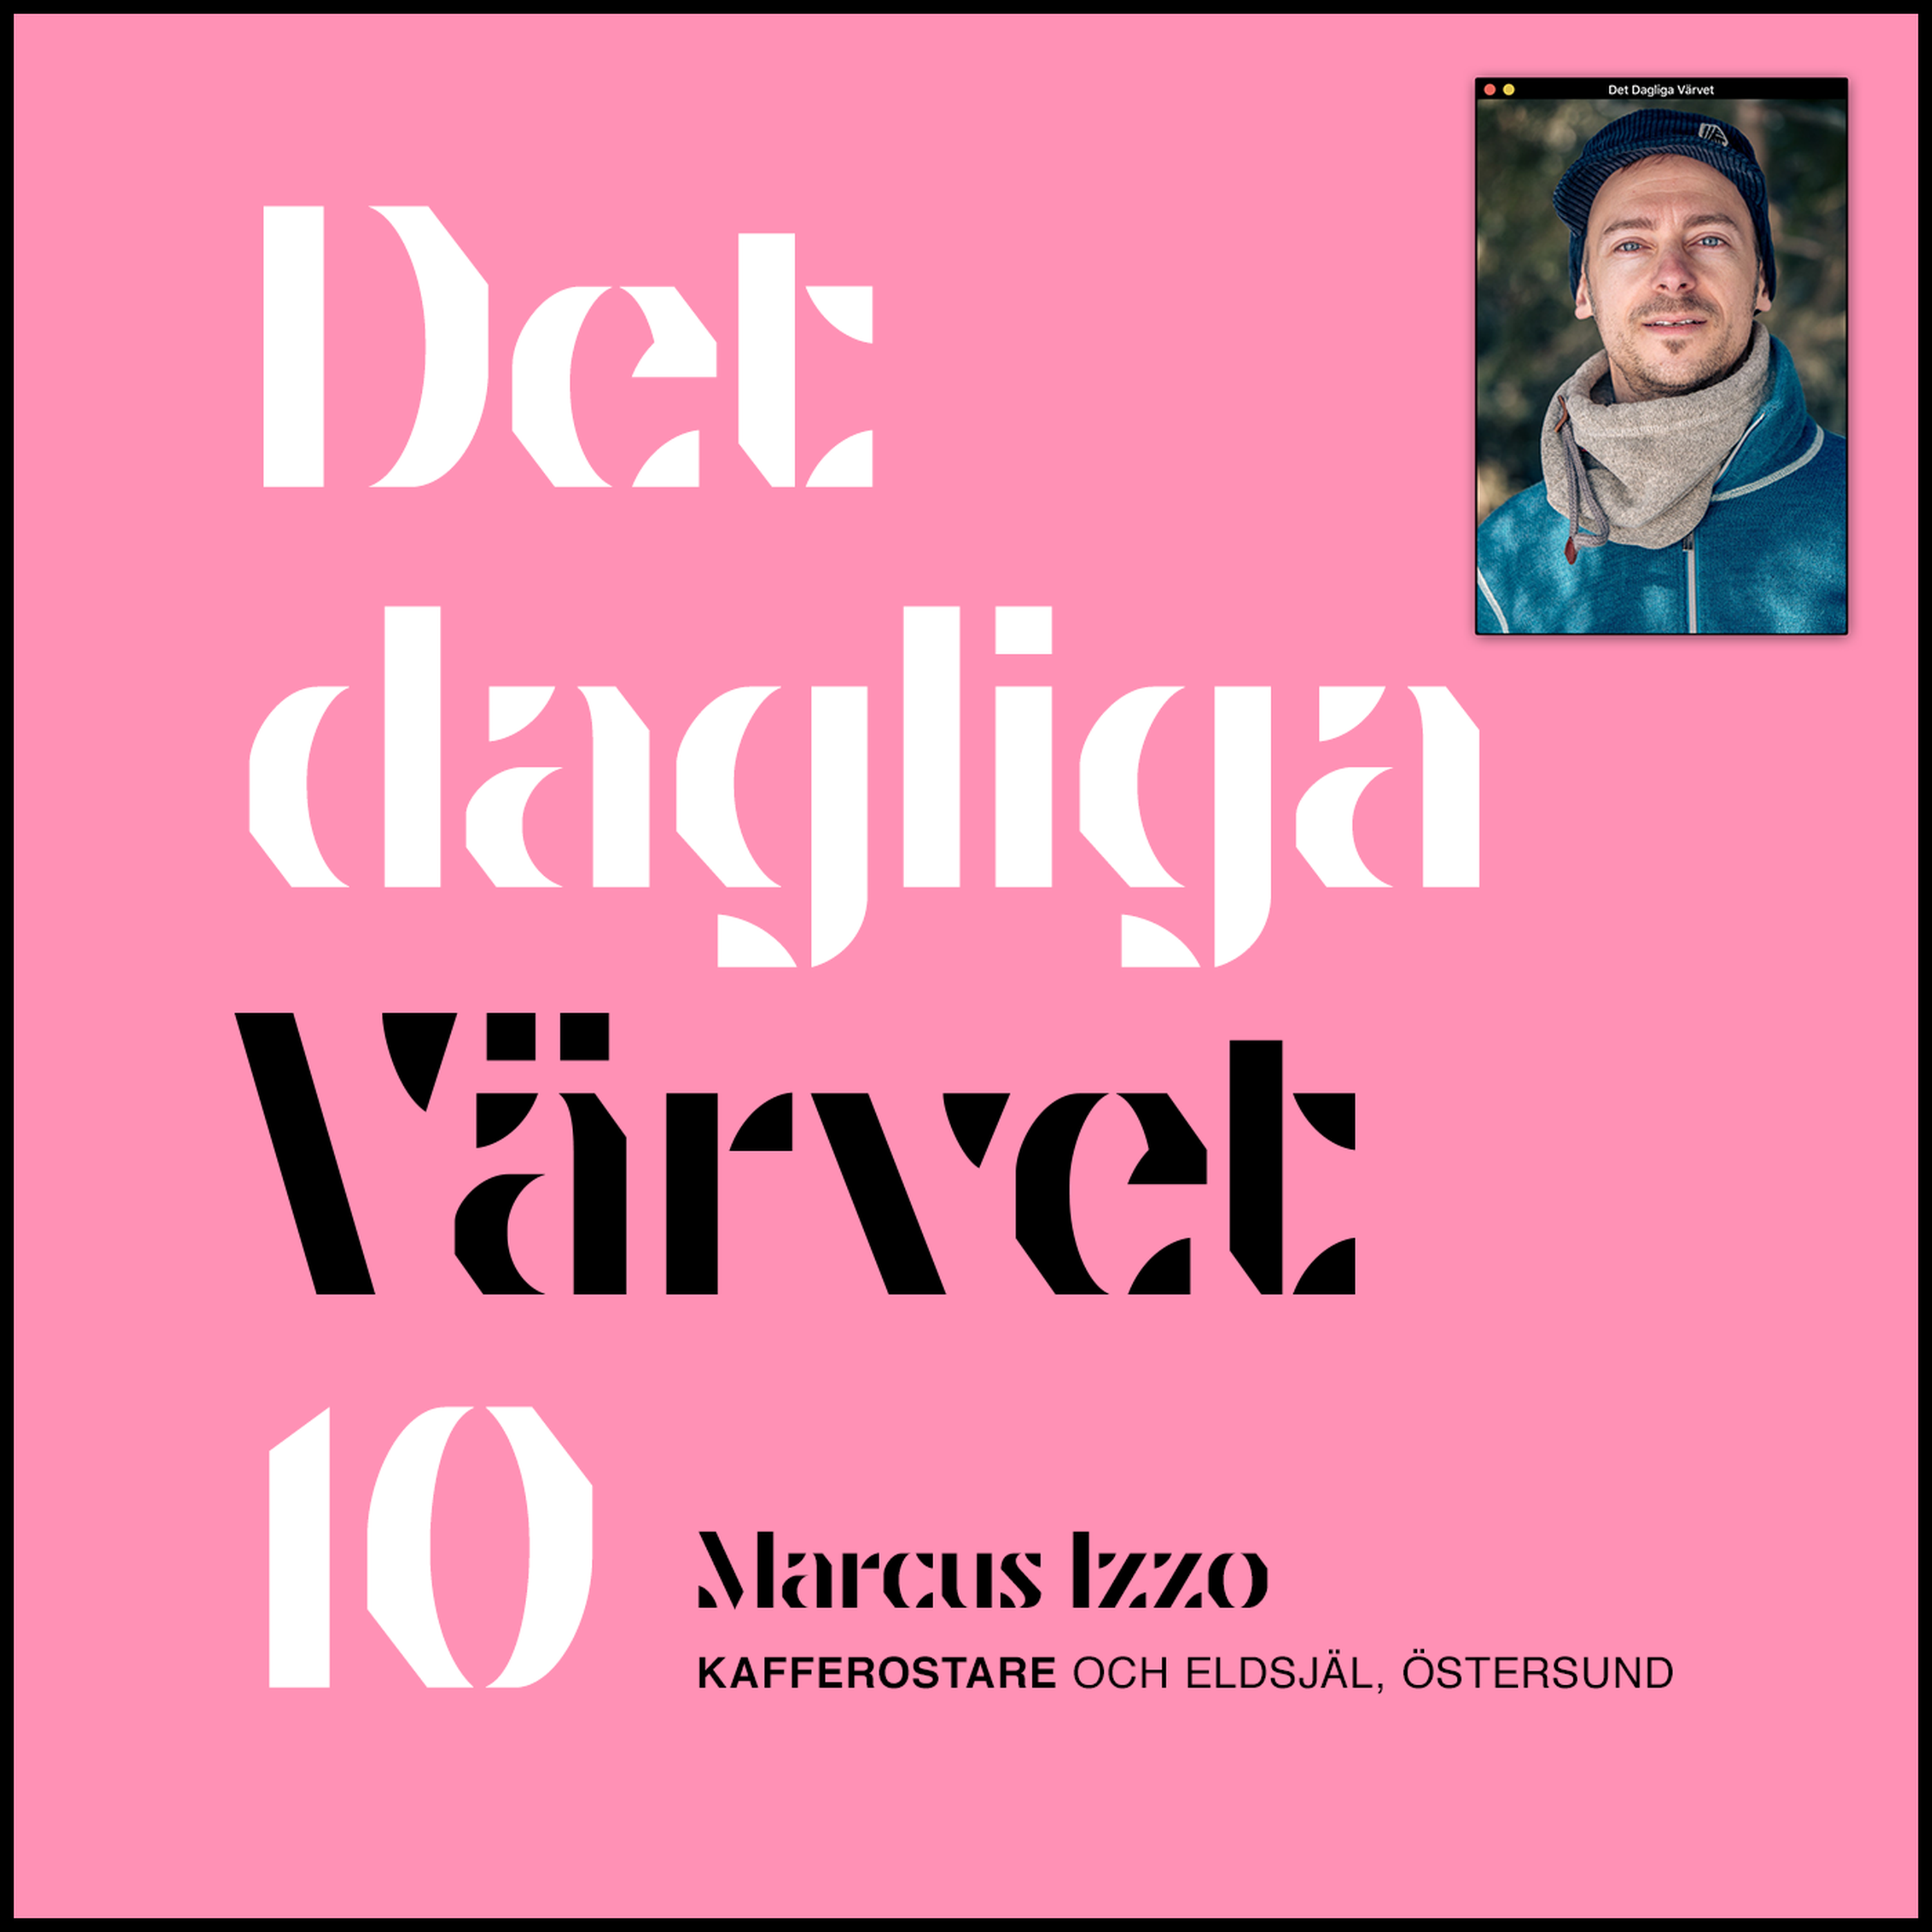 DET DAGLIGA VÄRVET #10 Marcus Izzo